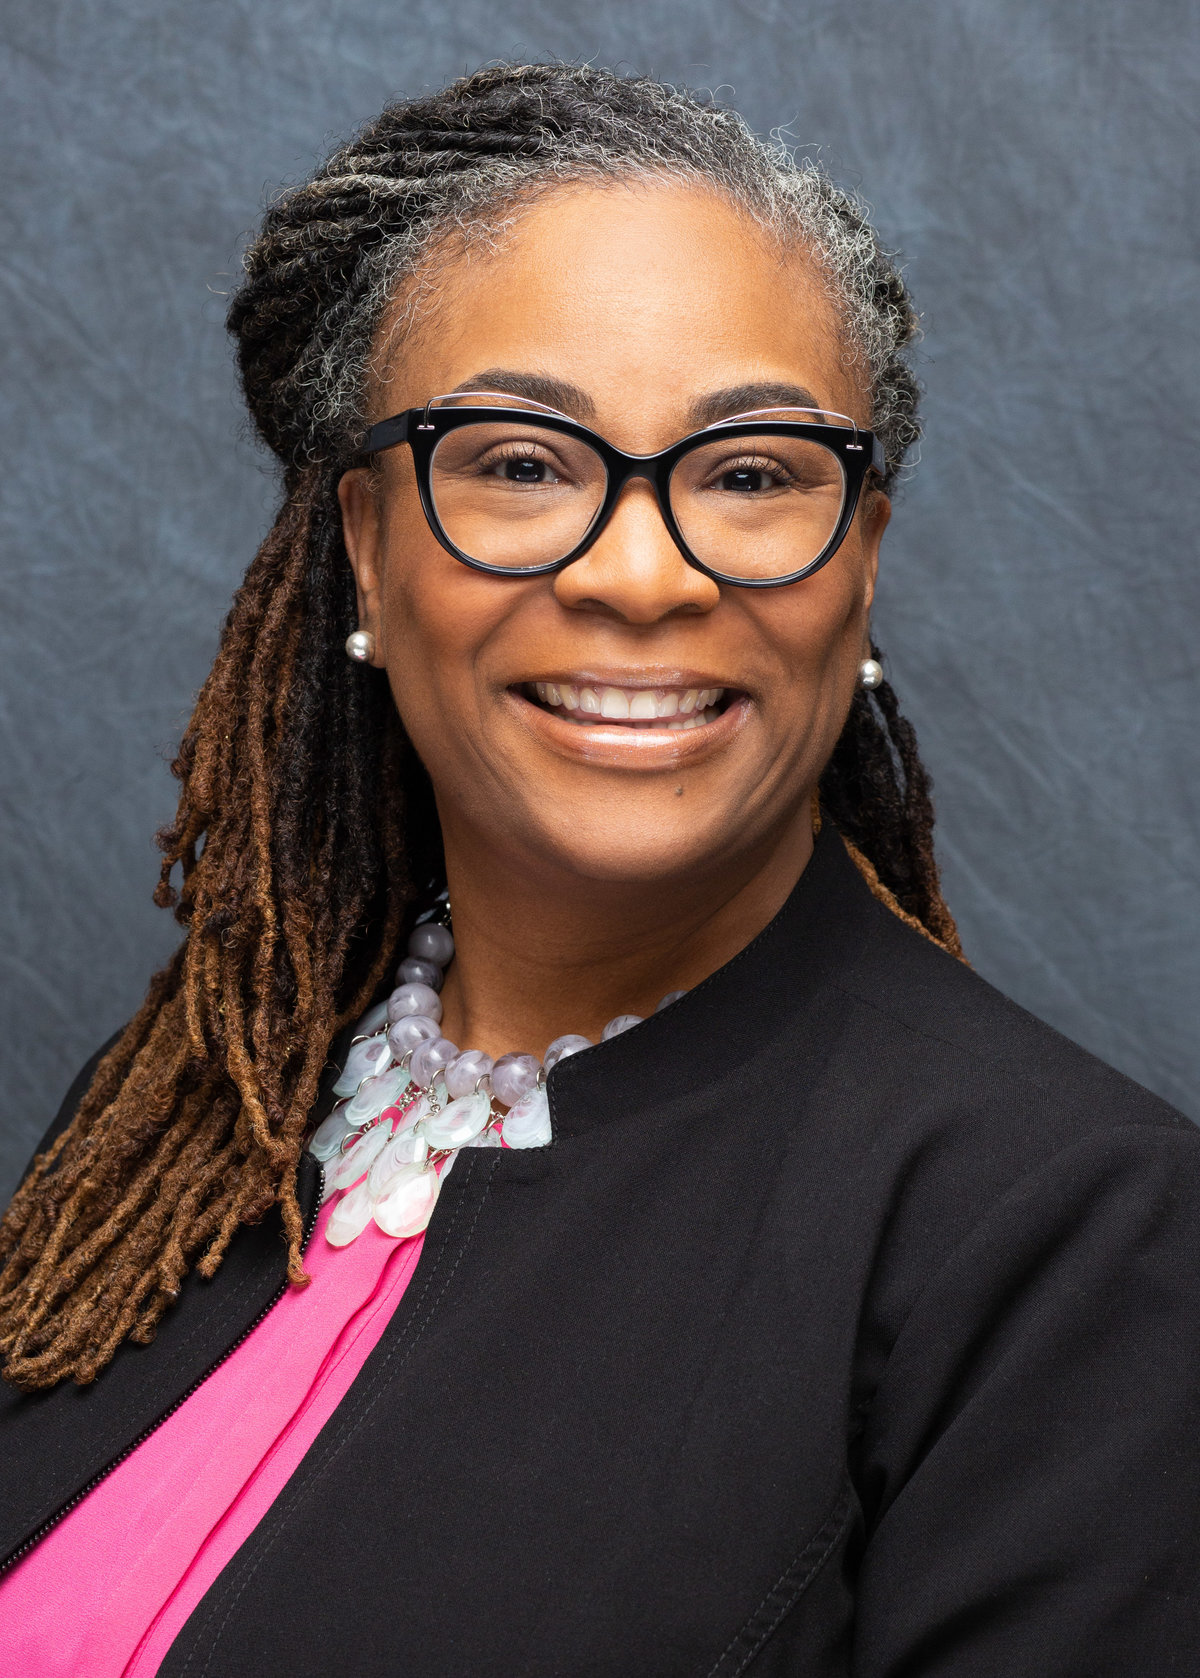 Vibrant headshot of a joyful black woman with elegant dreadlocks, stylish glasses, and a pink blouse, professionally photographed in Cincinnati.